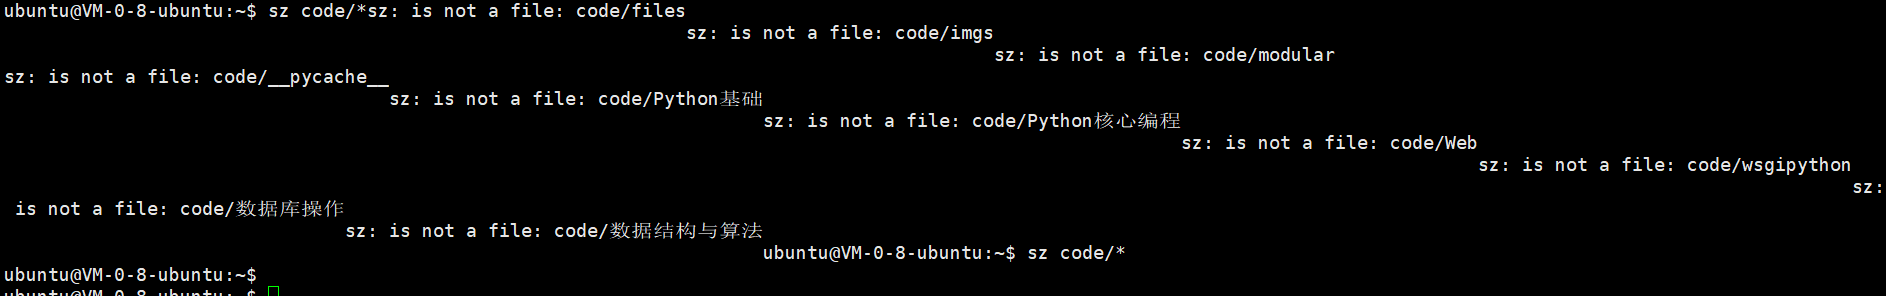 使用FileZilla从Linux系统下载文件